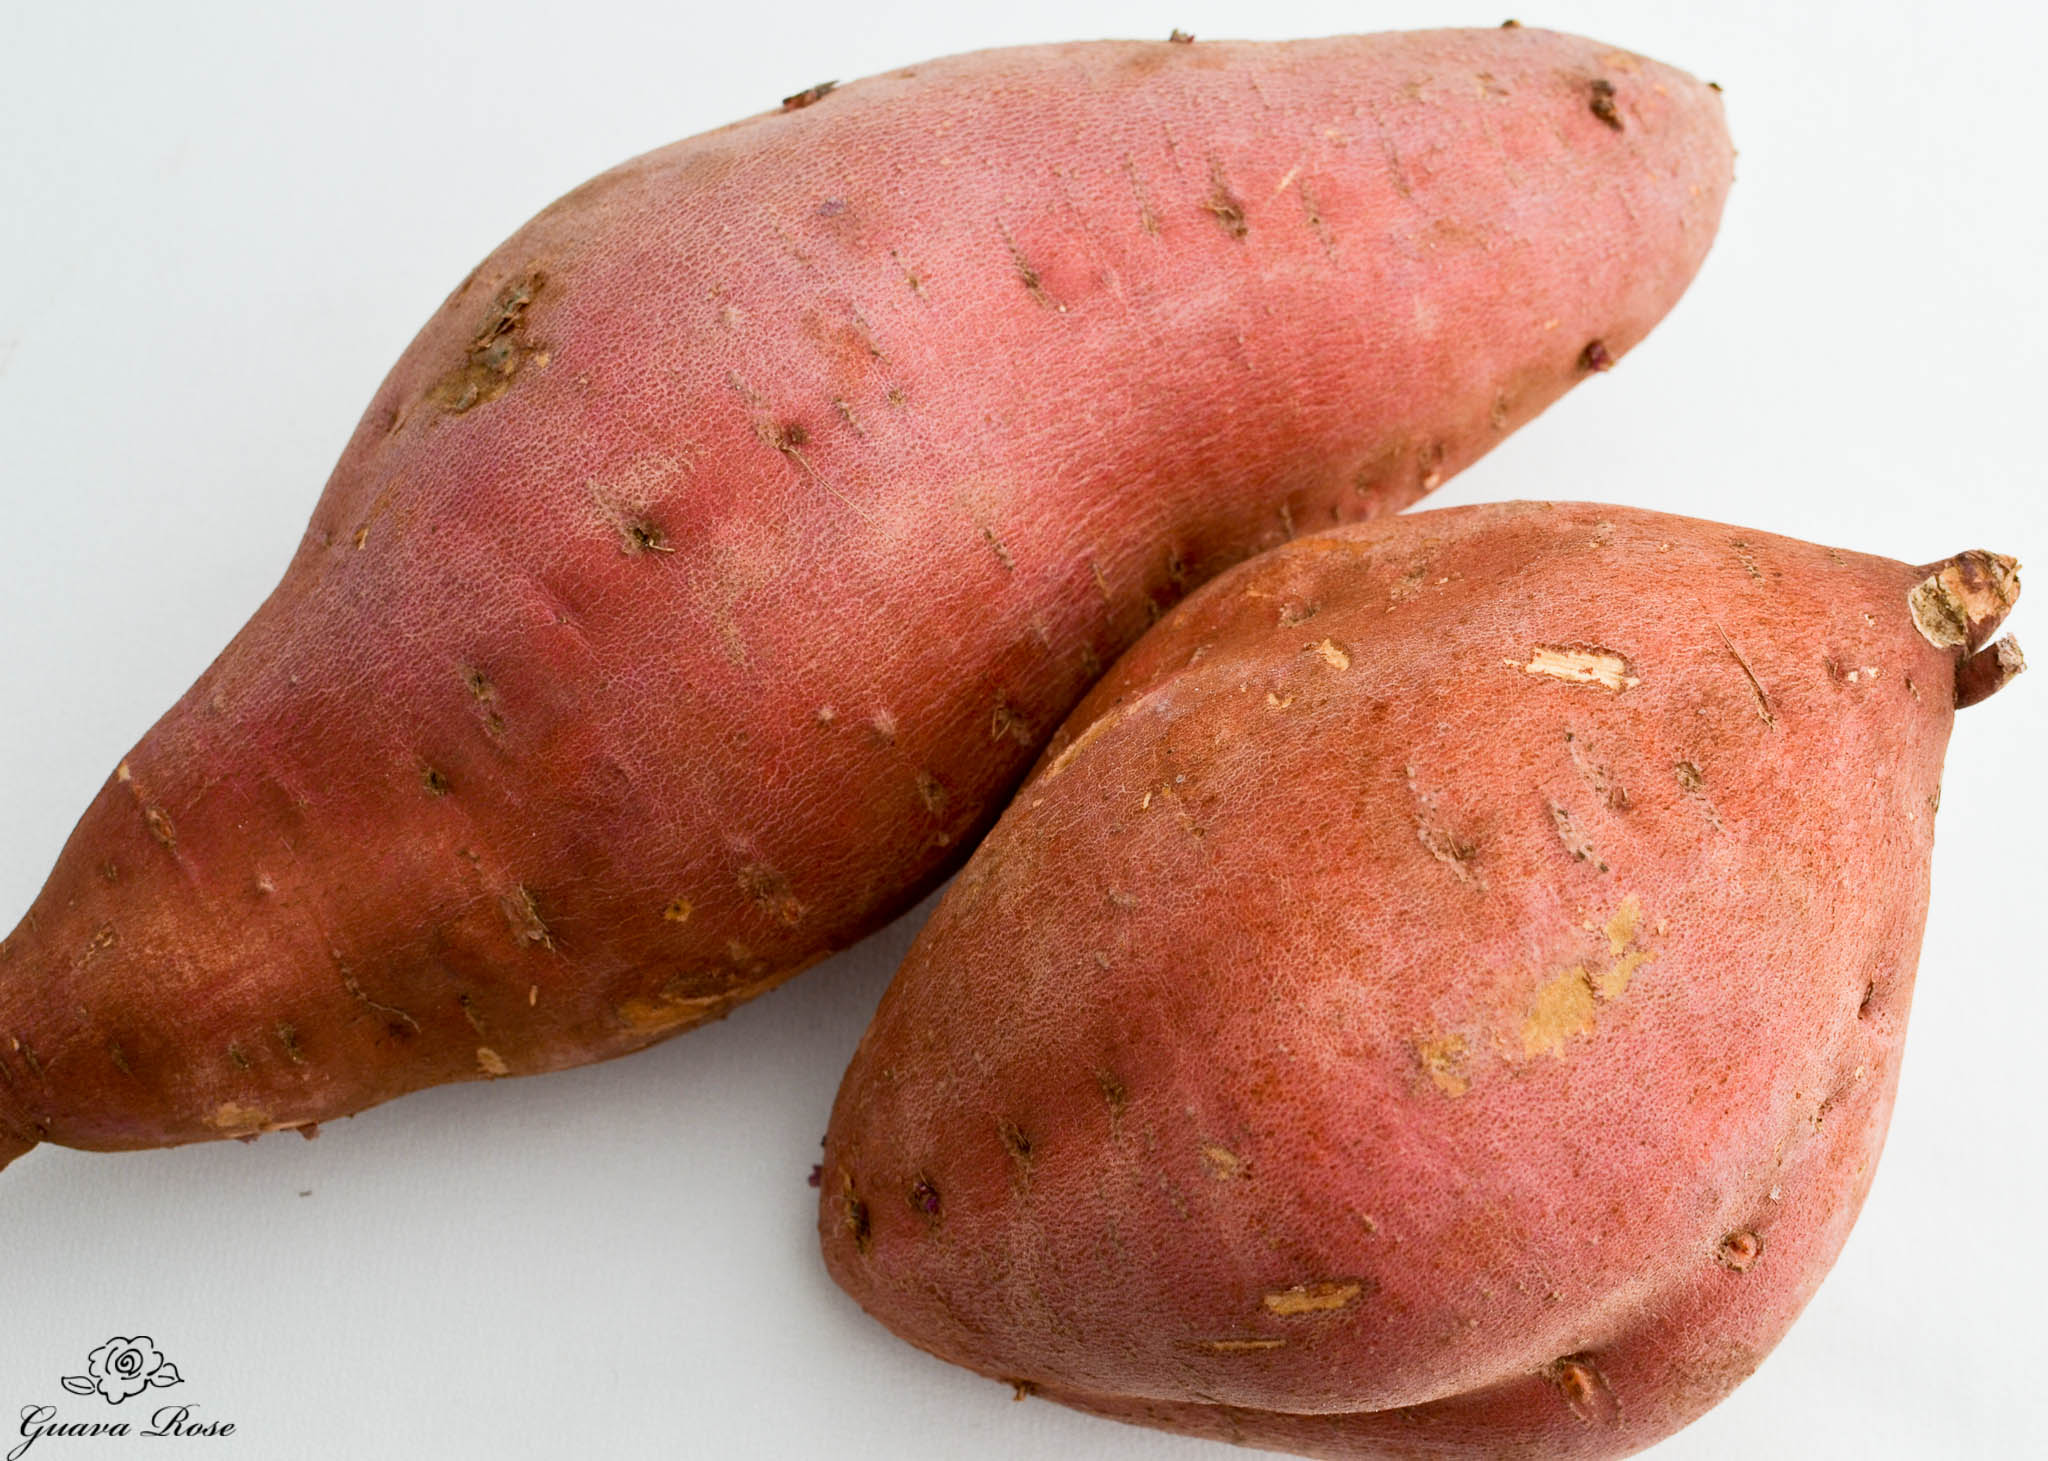 Large sweet potatoes